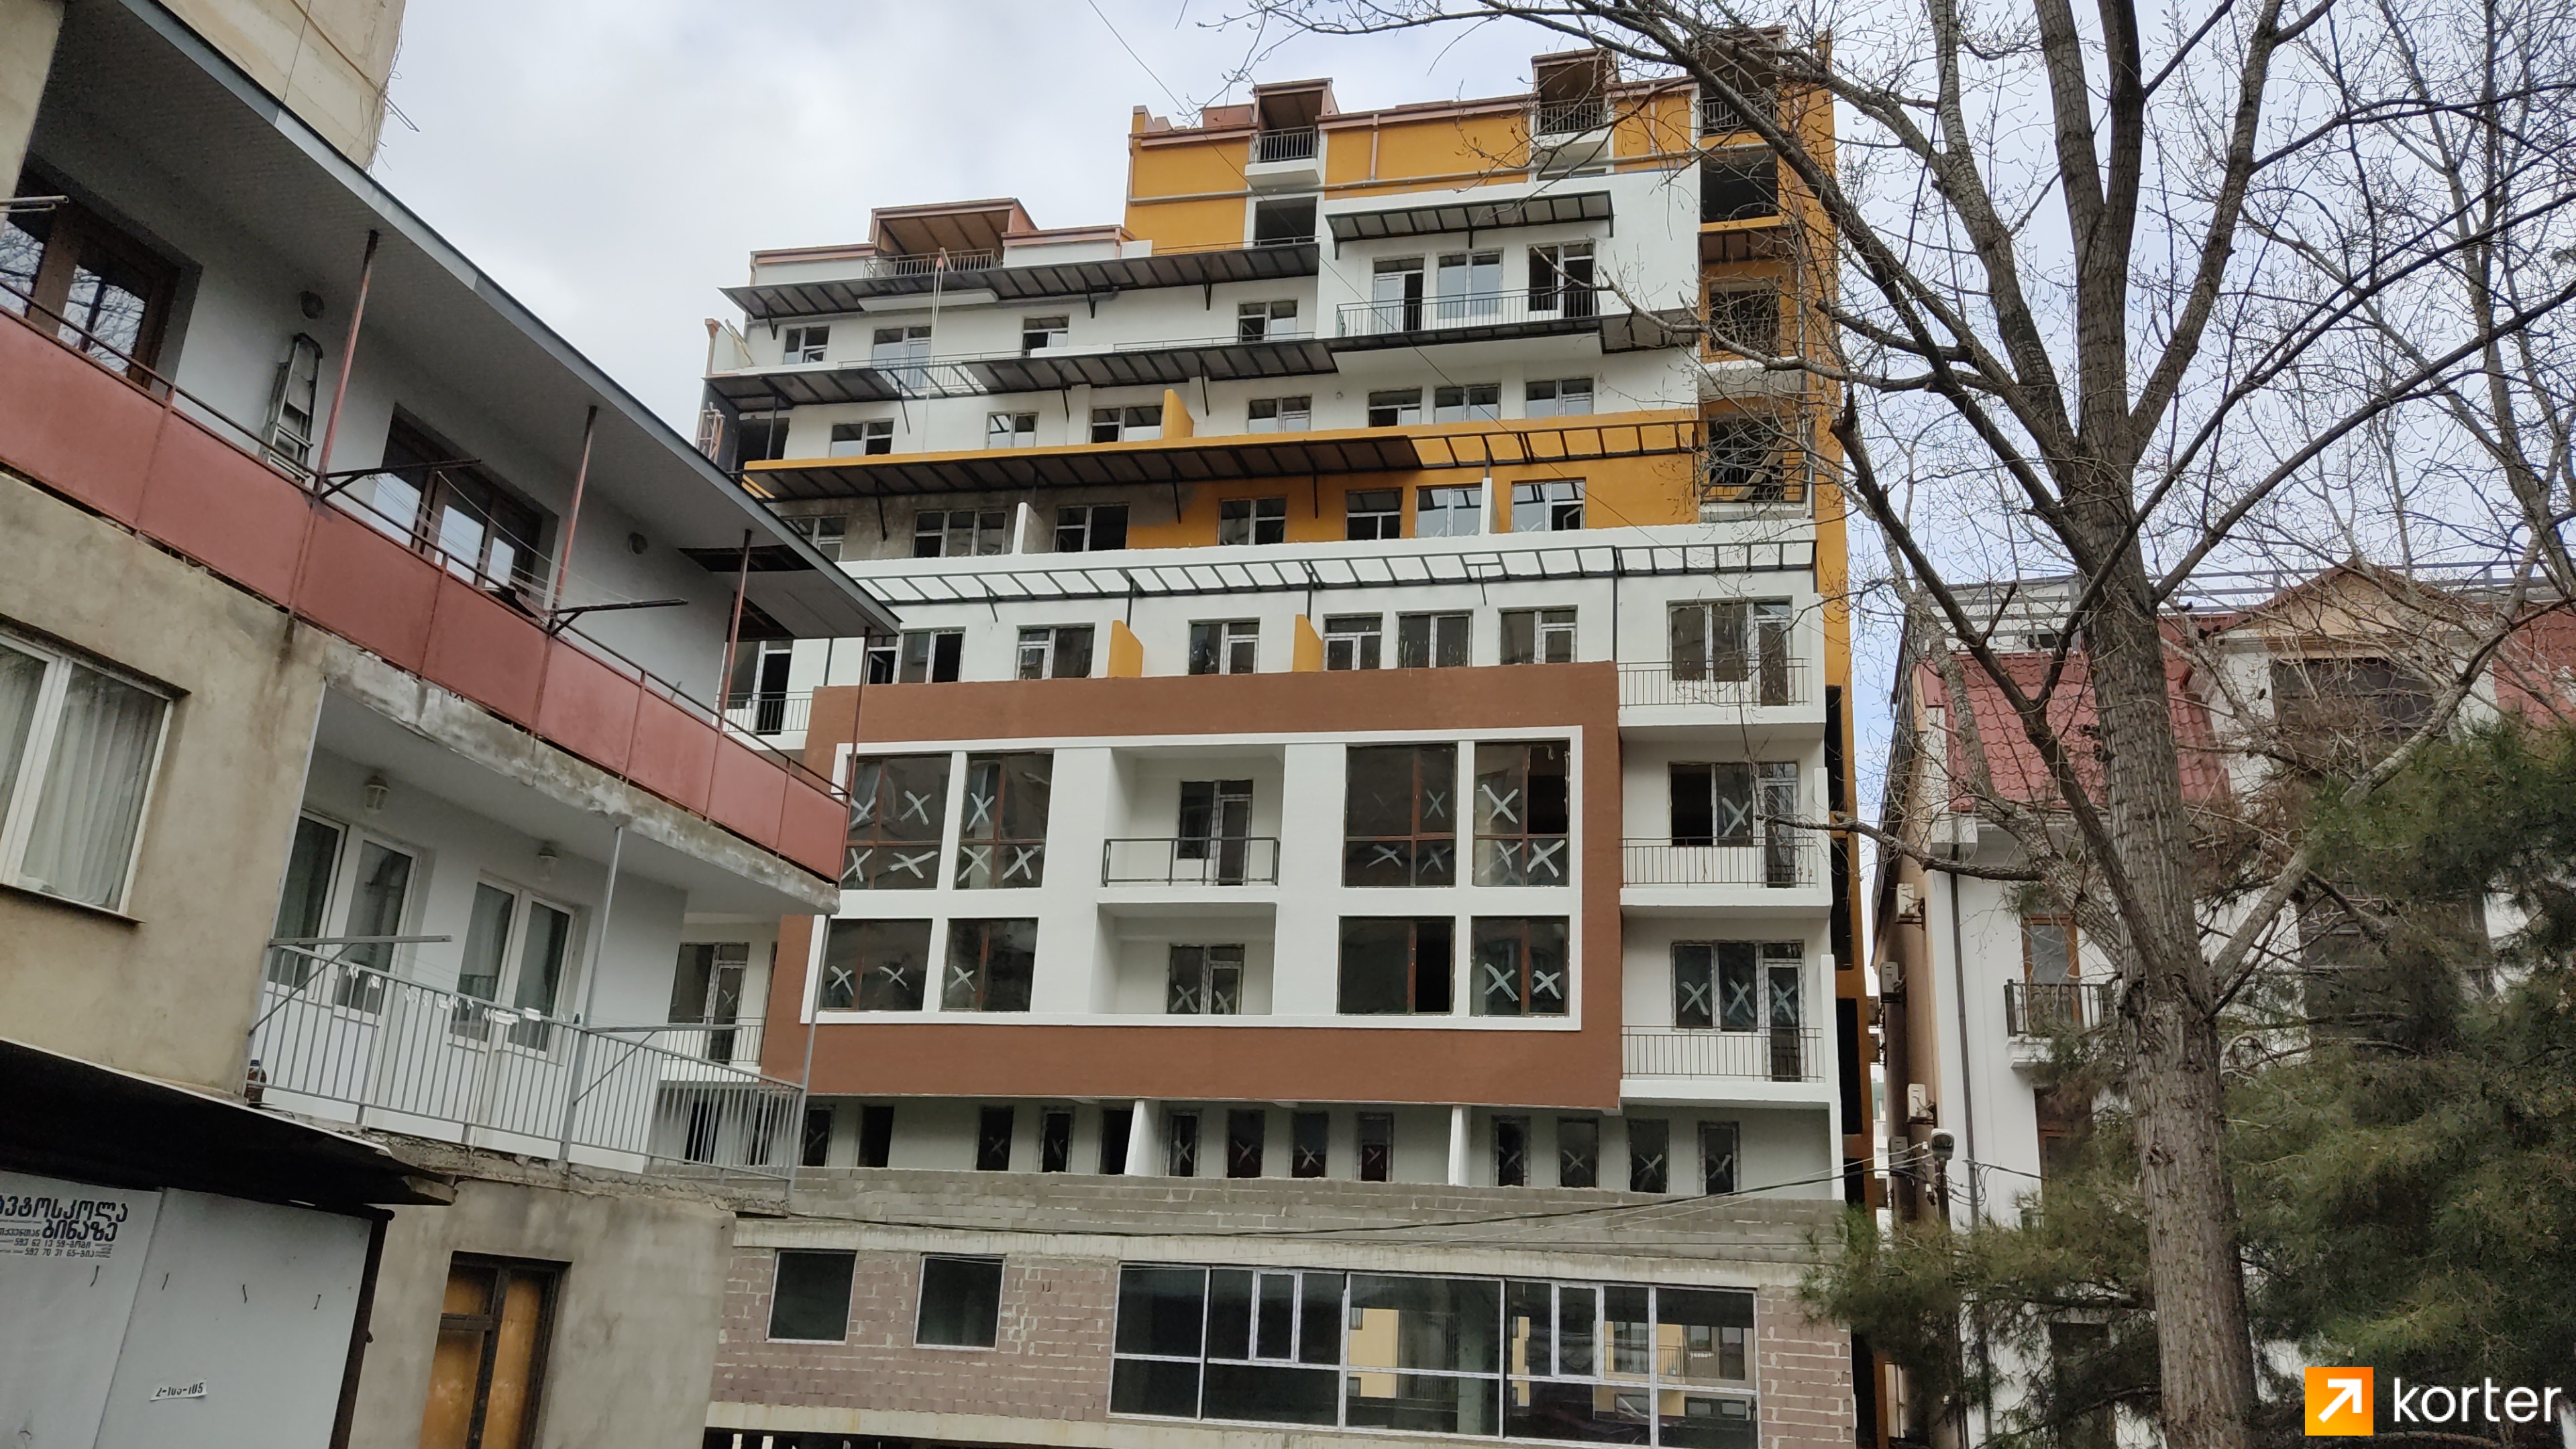 Construction progress House on Sairme 41, 43 - Angle 1, February 2022